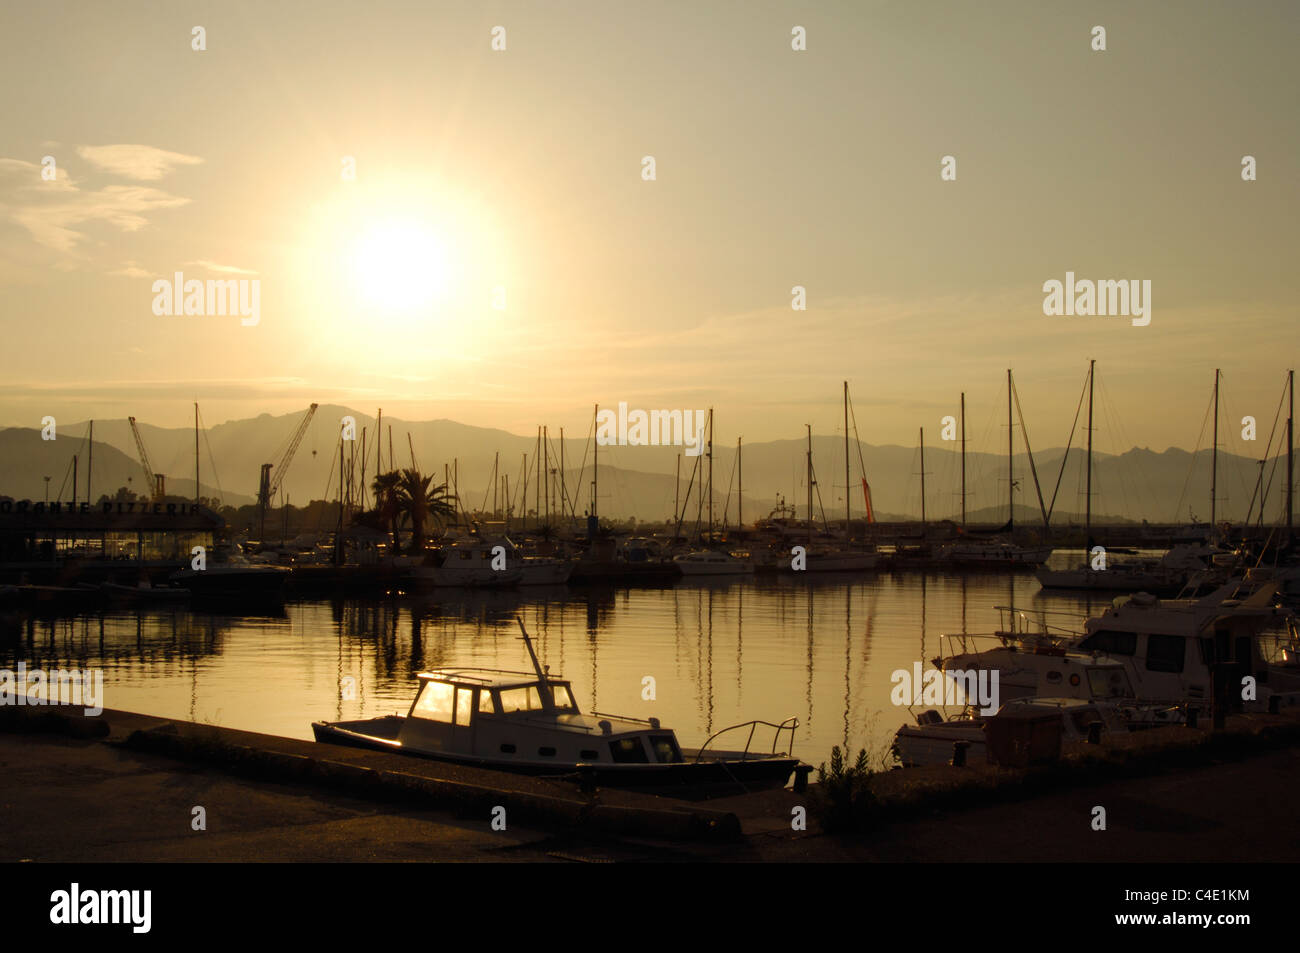 Sunset and yachts at the Arbatax touristic port, Ogliastra region, Sardinia, Italy Stock Photo